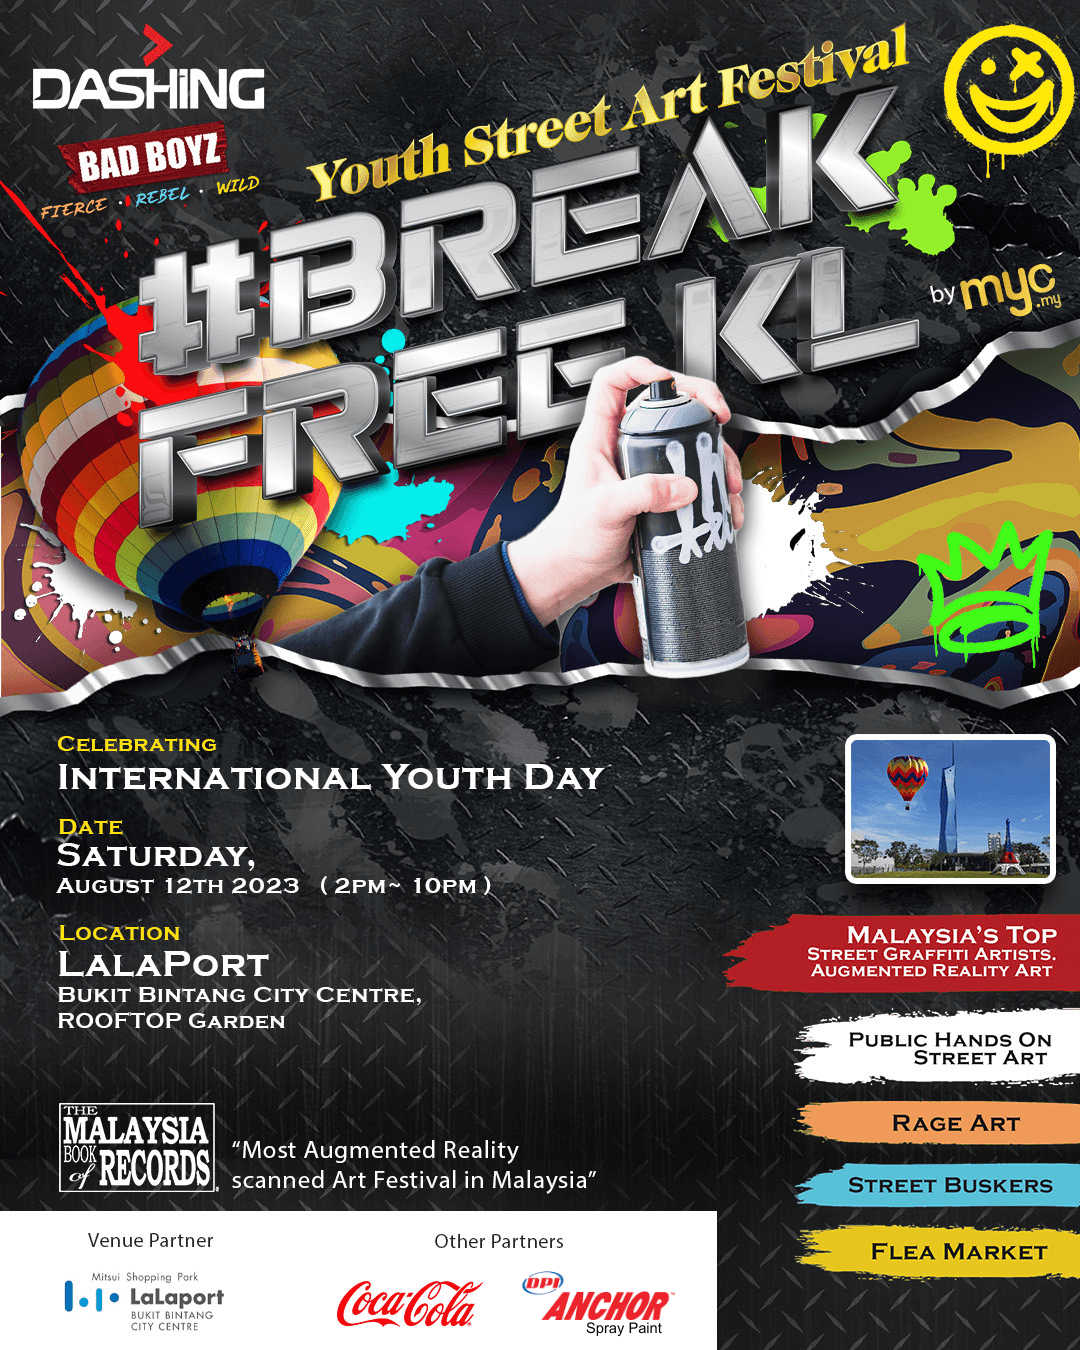 Dashing #BreakFreeKL Youth Street Art Festival